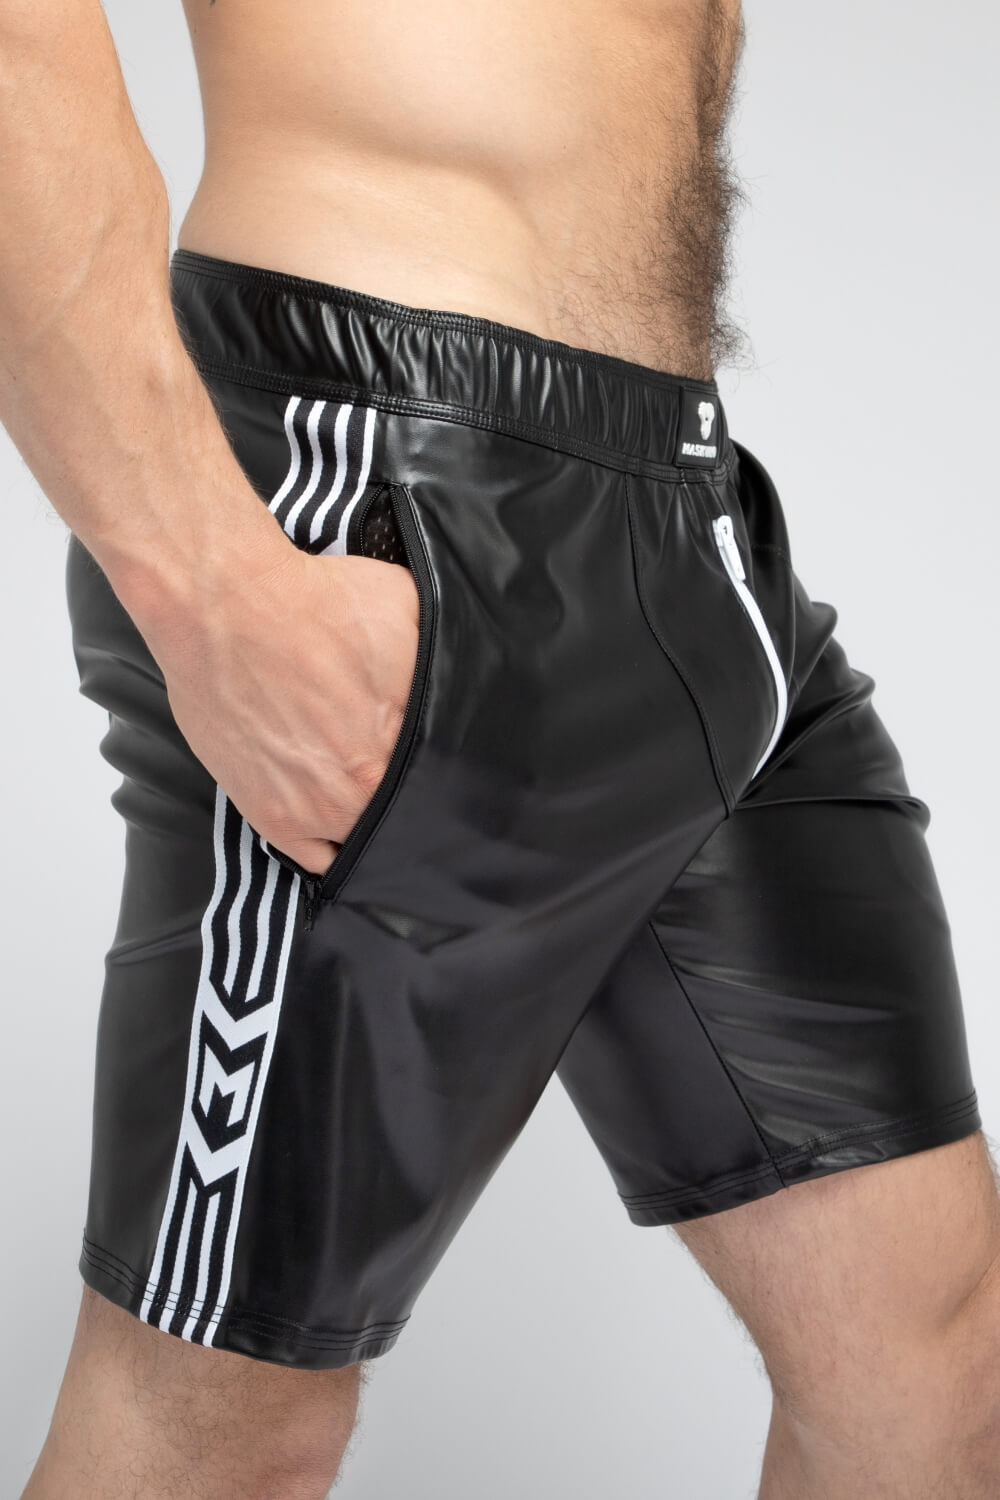 Skulla. Shorts de futebol em couro sintético. Preto + Branco 